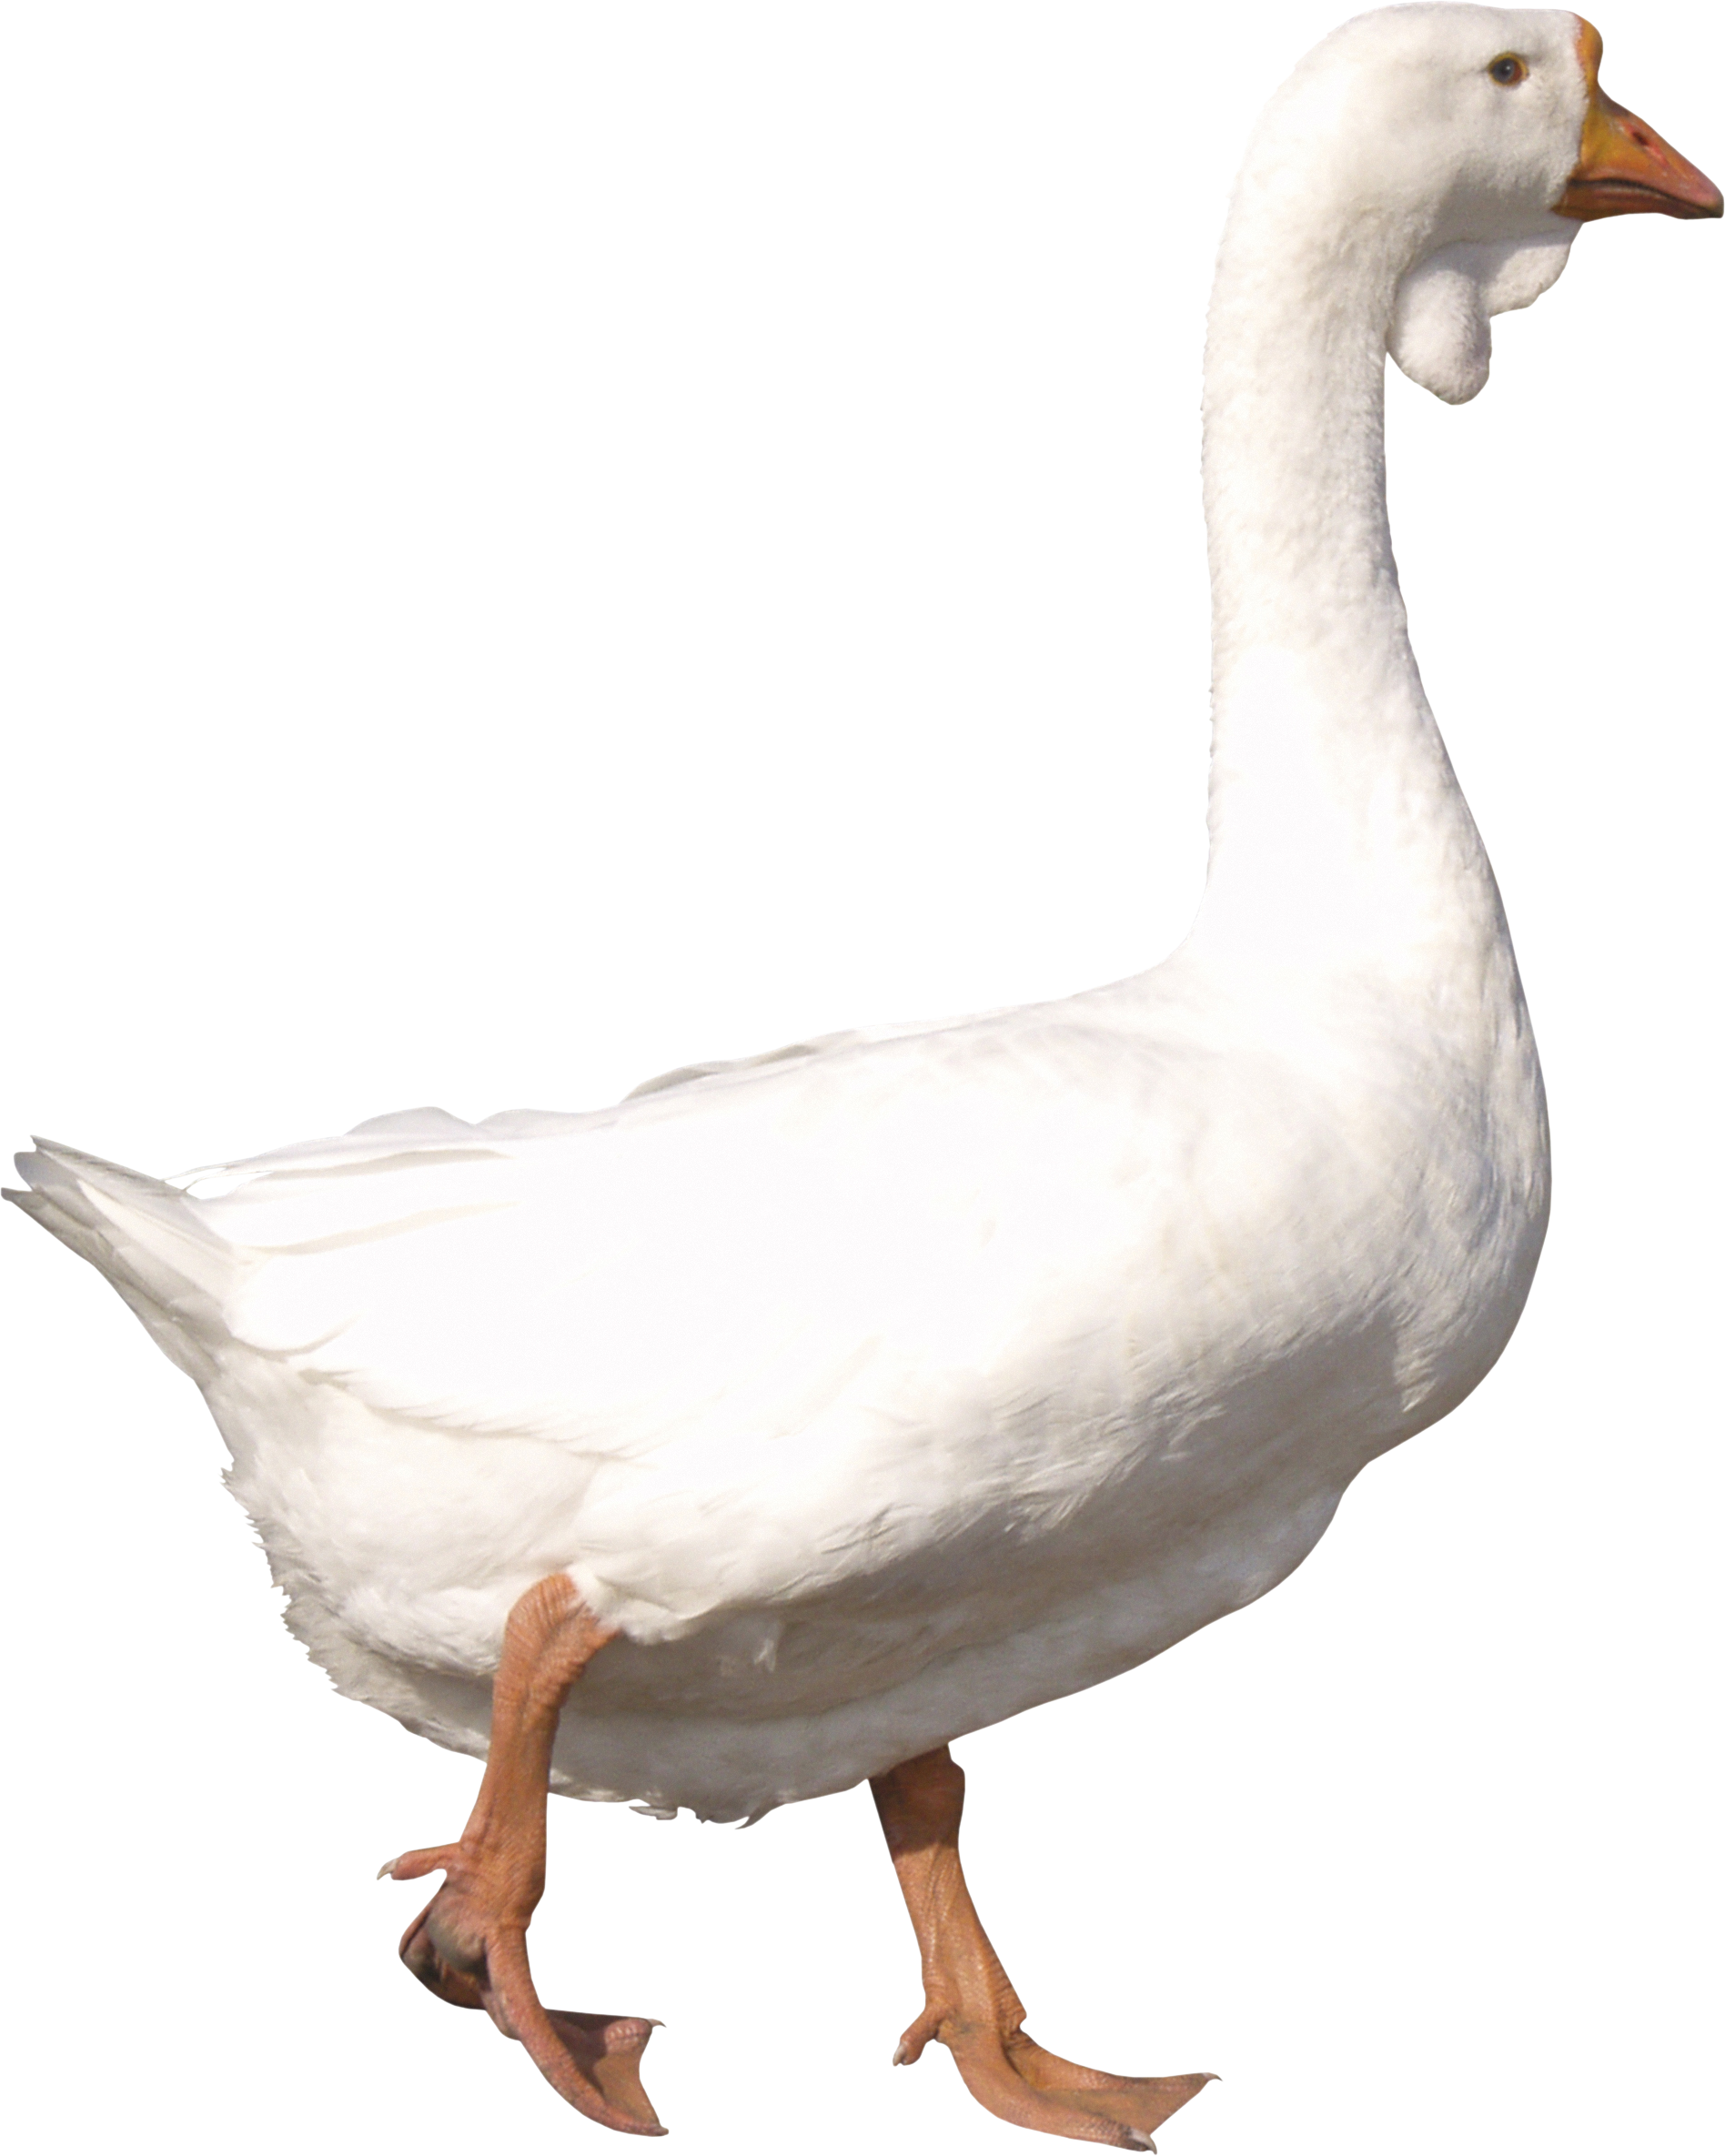 Goose.png